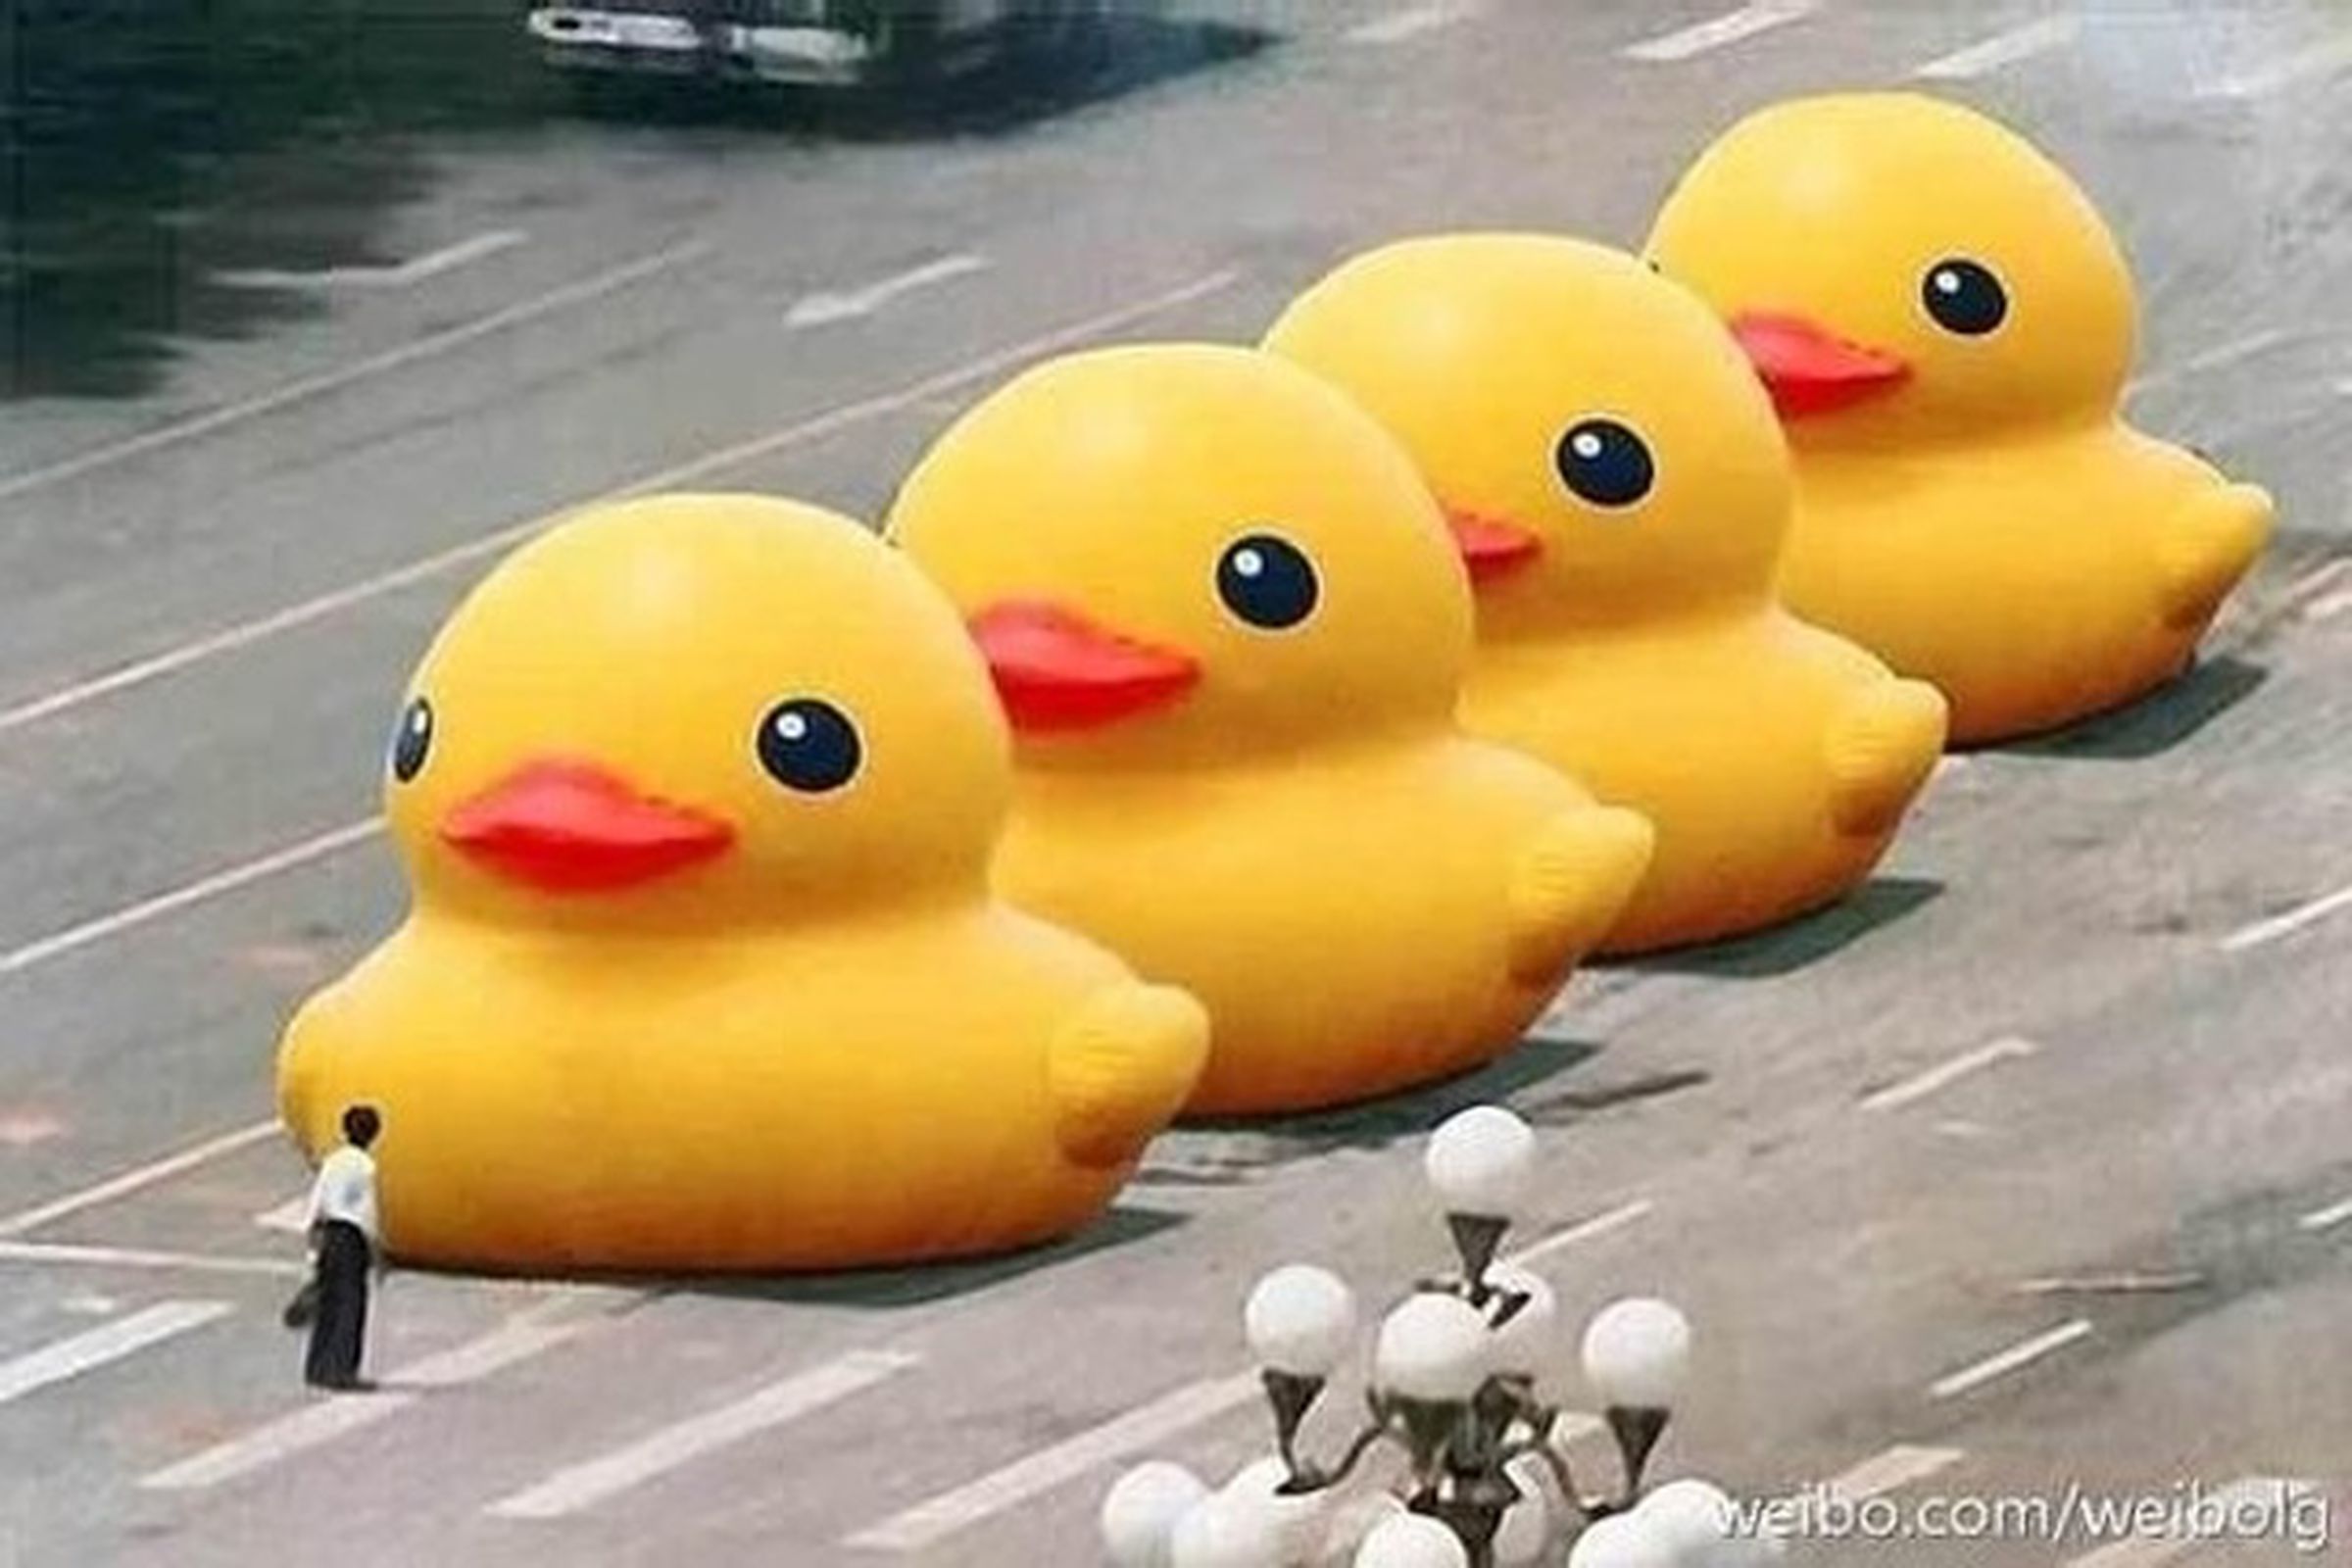 tiananmen rubber duck (sina weibo)